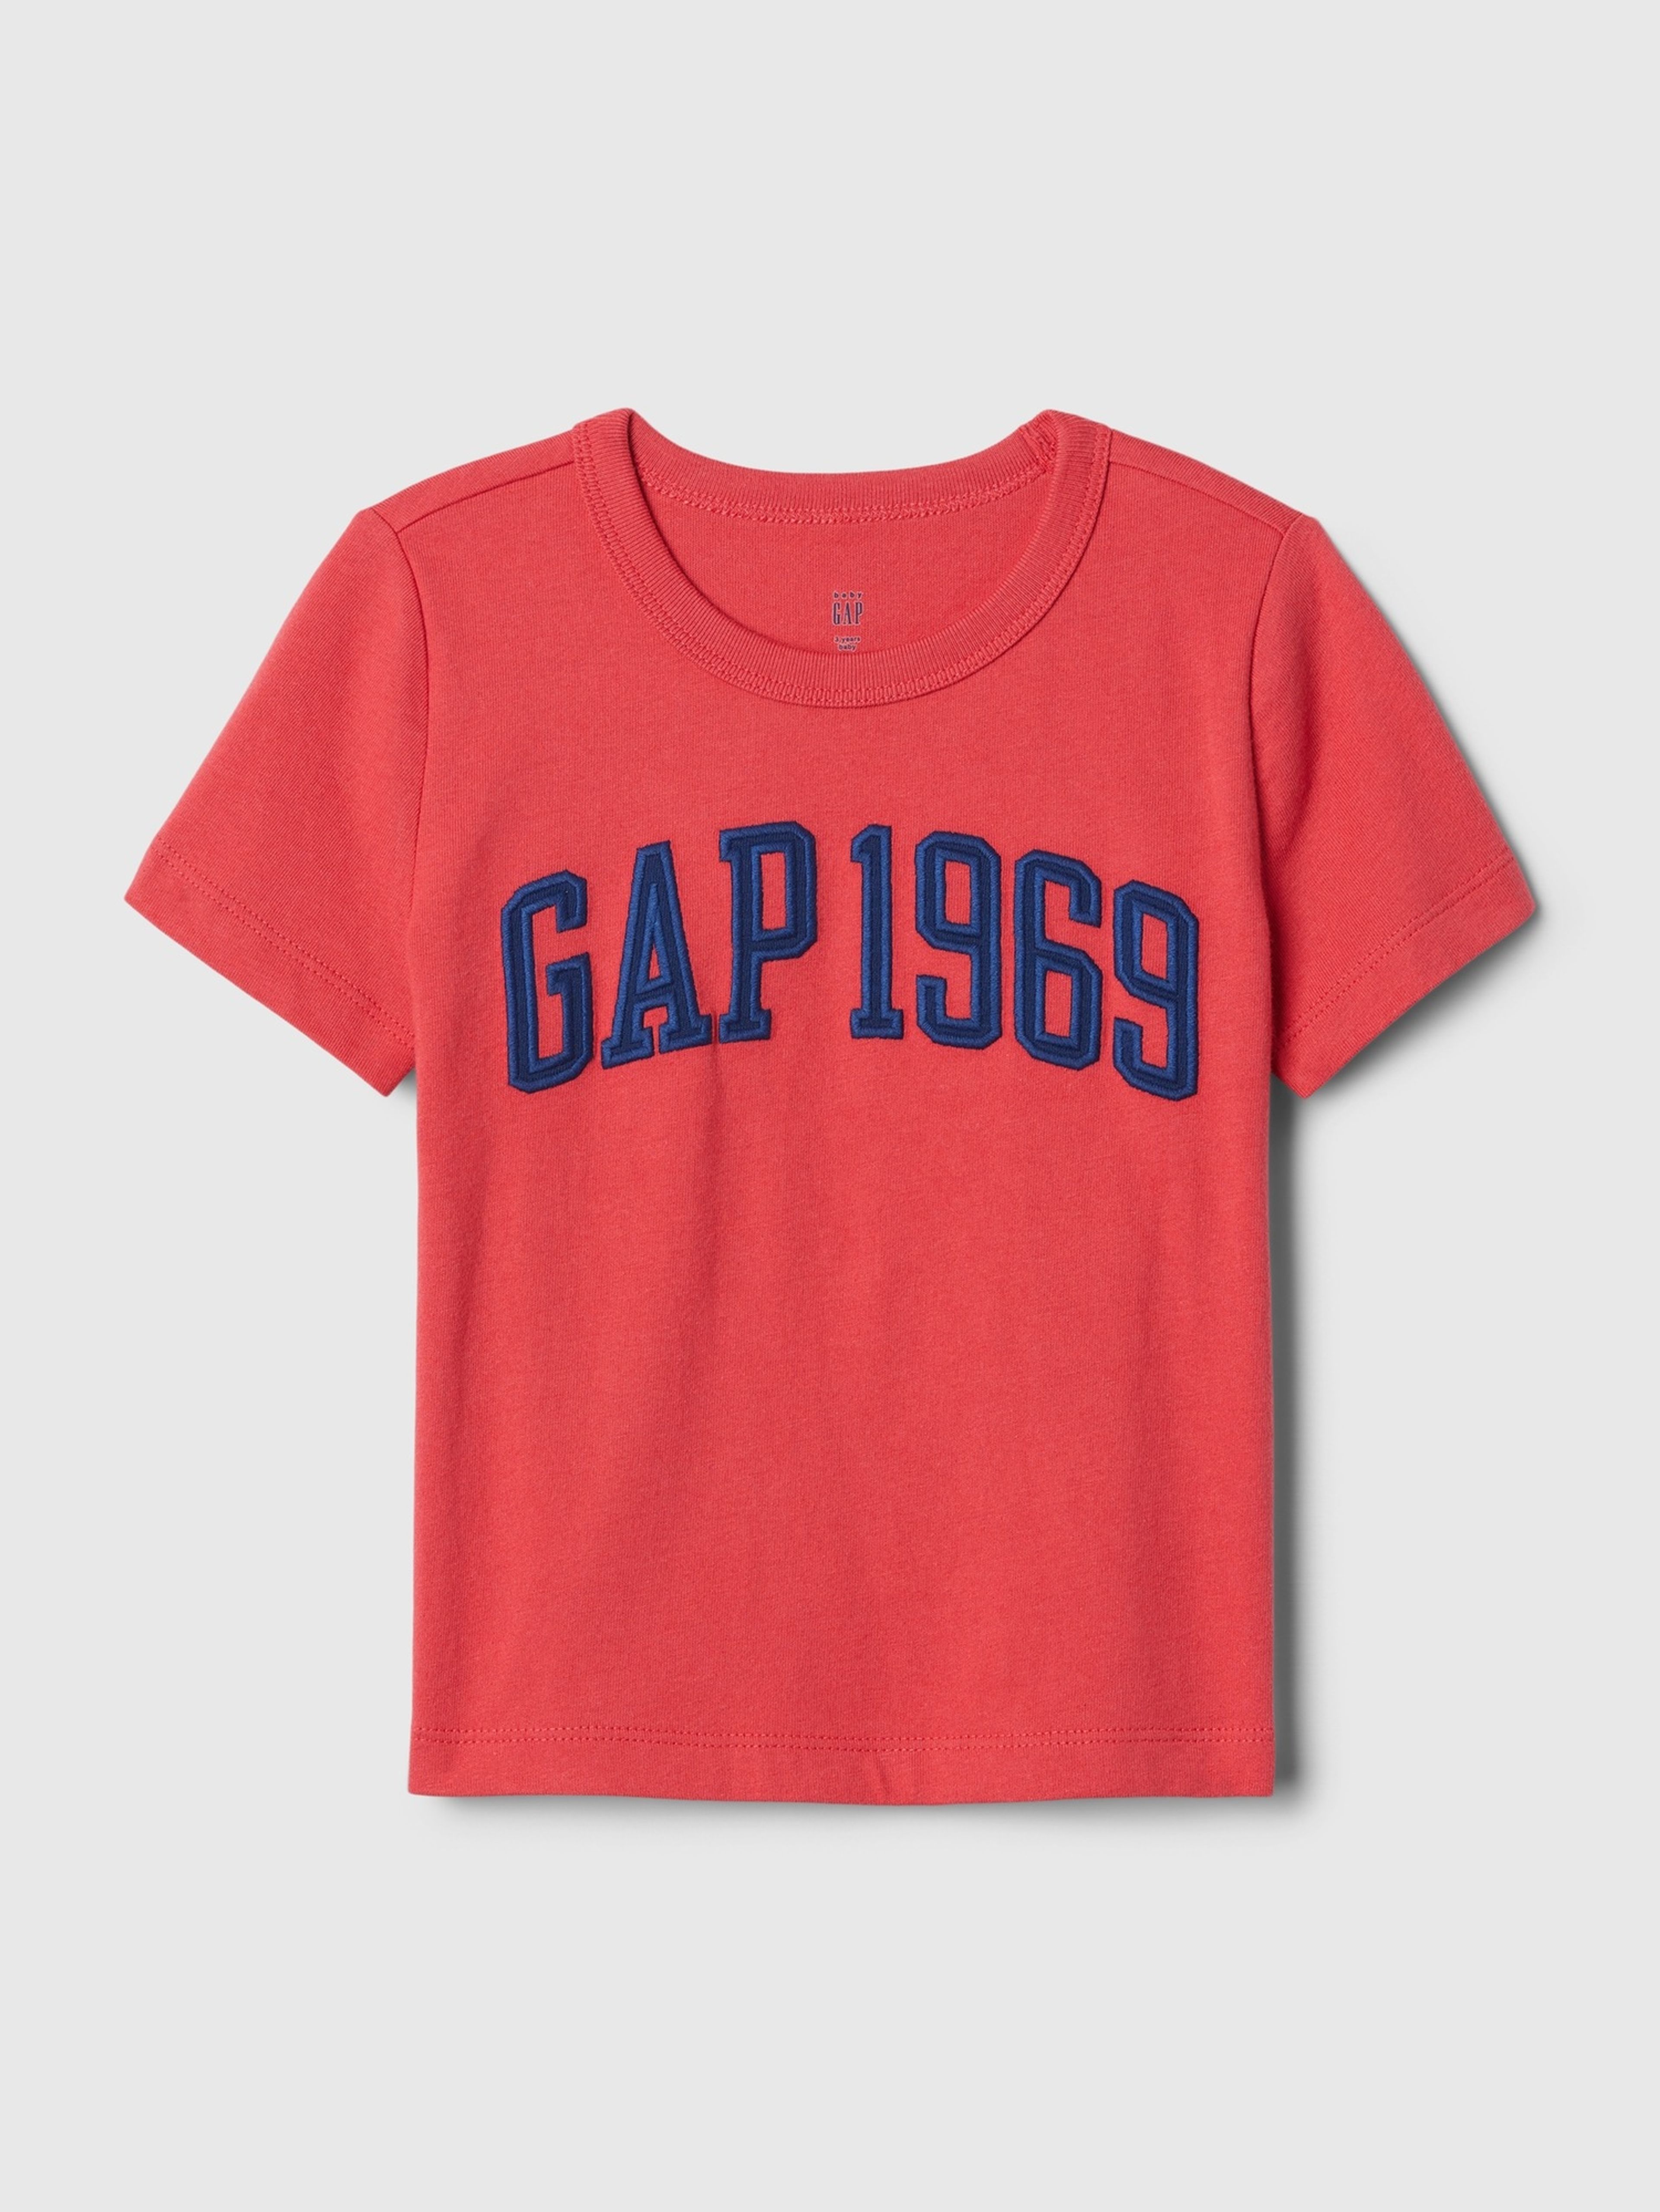 Detské tričko GAP 1969